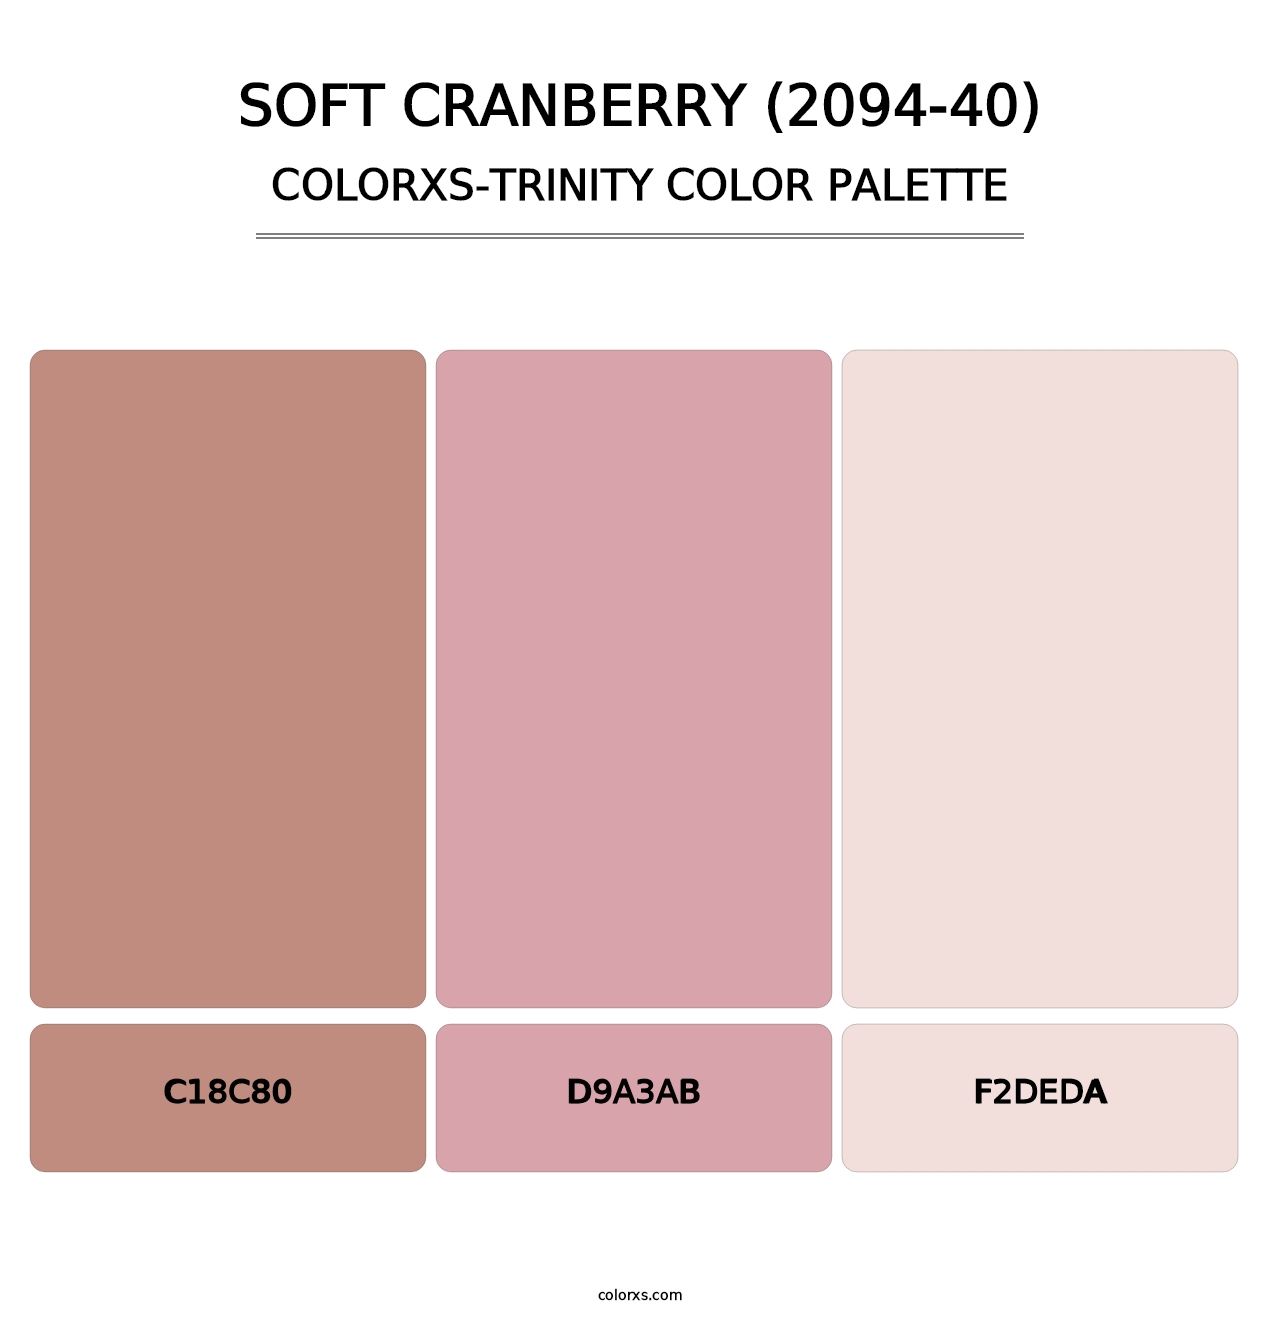 Soft Cranberry (2094-40) - Colorxs Trinity Palette